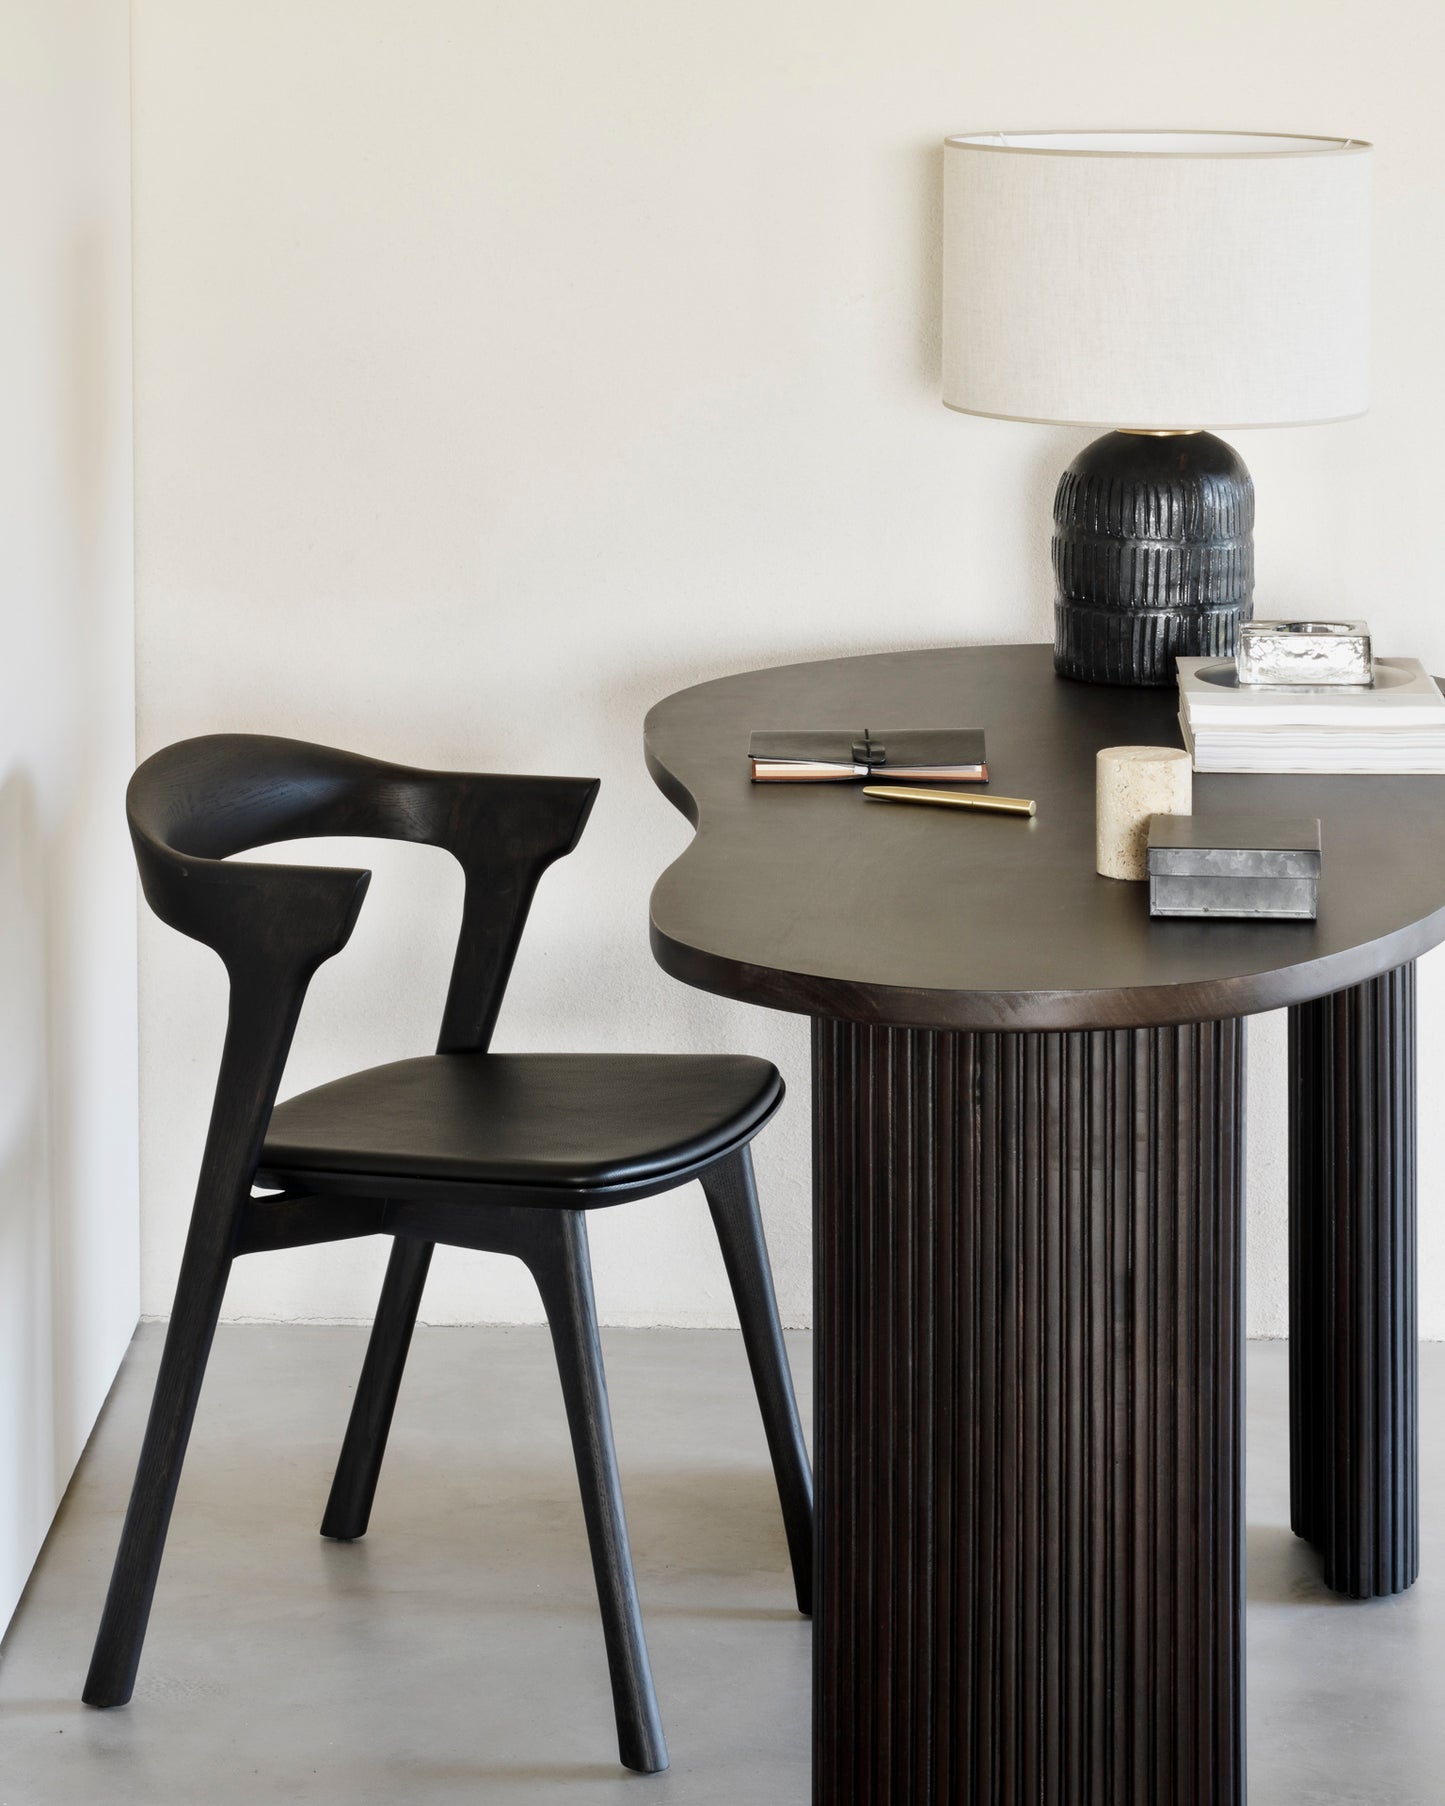 Load image into Gallery viewer, Bok Dining Chair by Alain Van Havre | Oak Brown | Brown Leather
